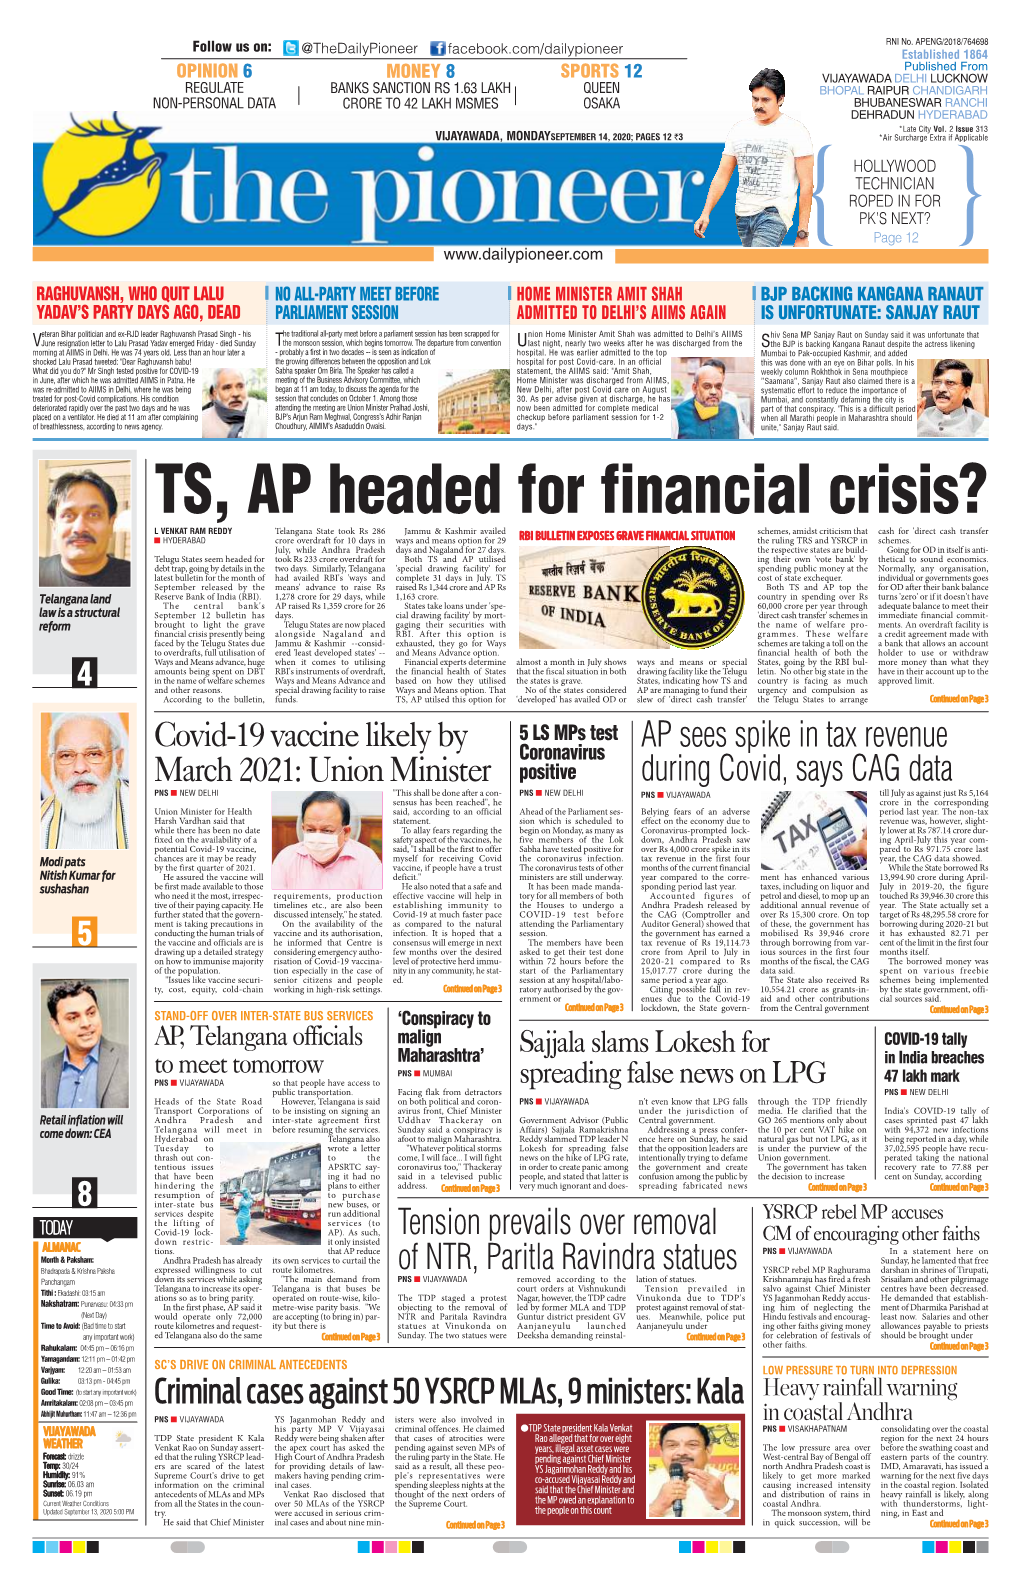 TS, AP Headed for Financial Crisis?